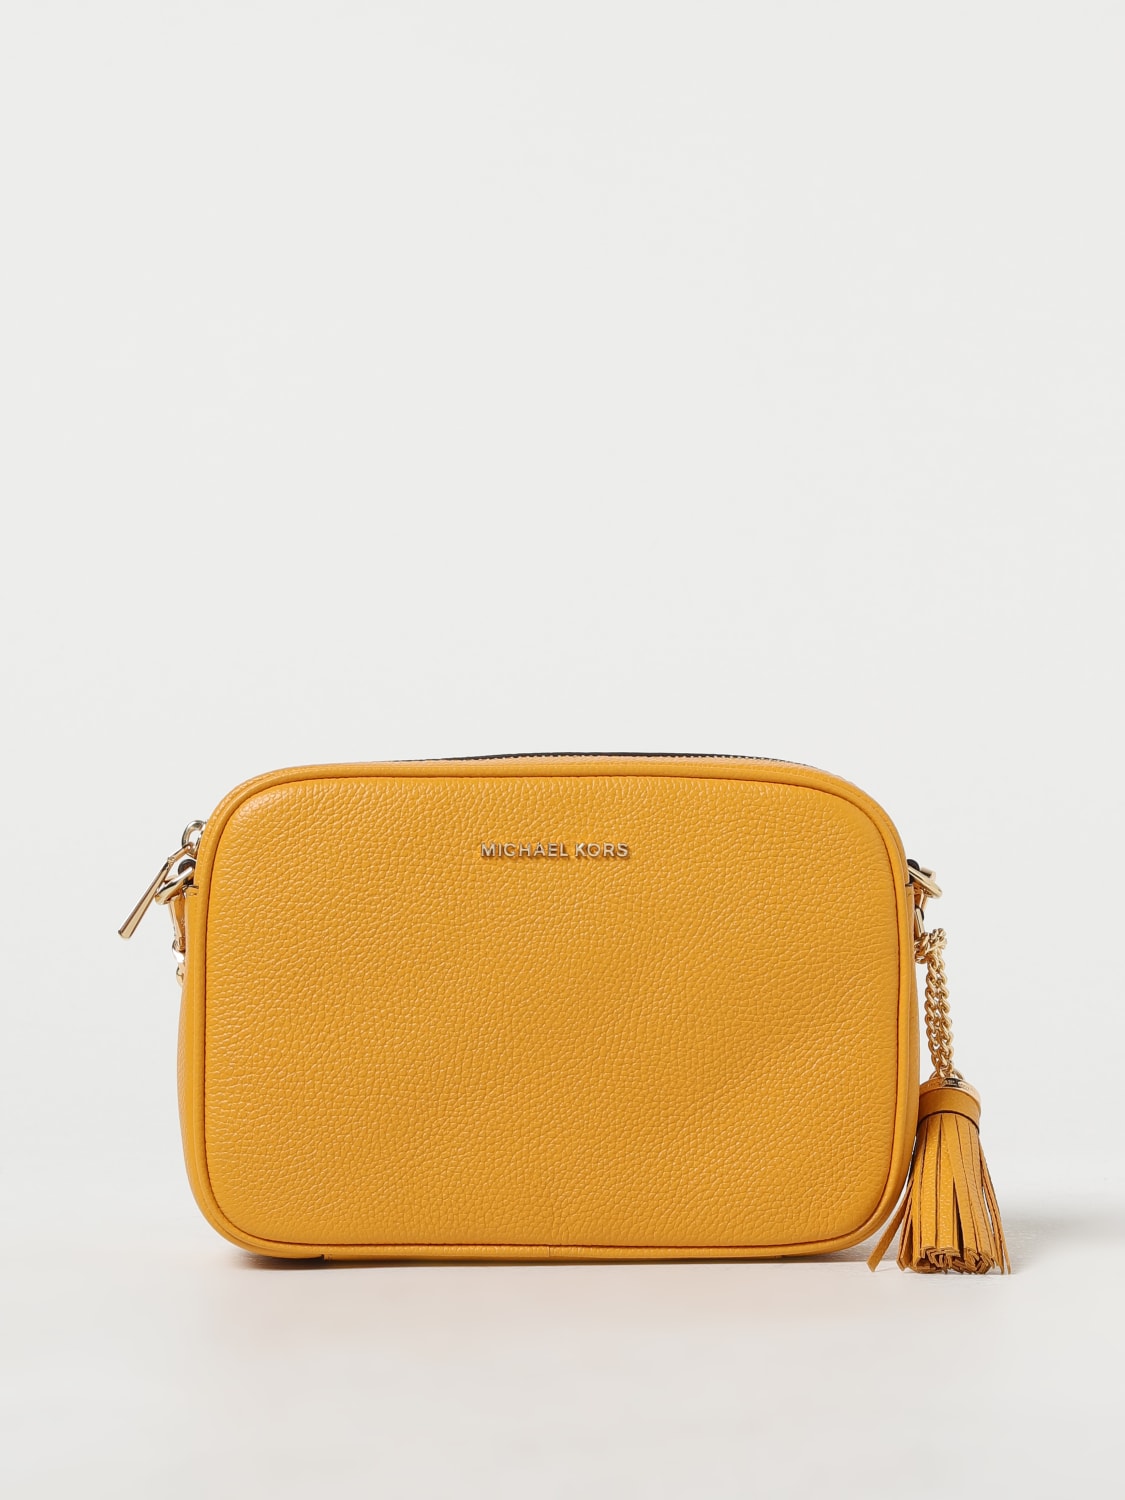 MICHAEL KORS: mini bag for woman - Gold  Michael Kors mini bag 32F7GGNM8L  online at